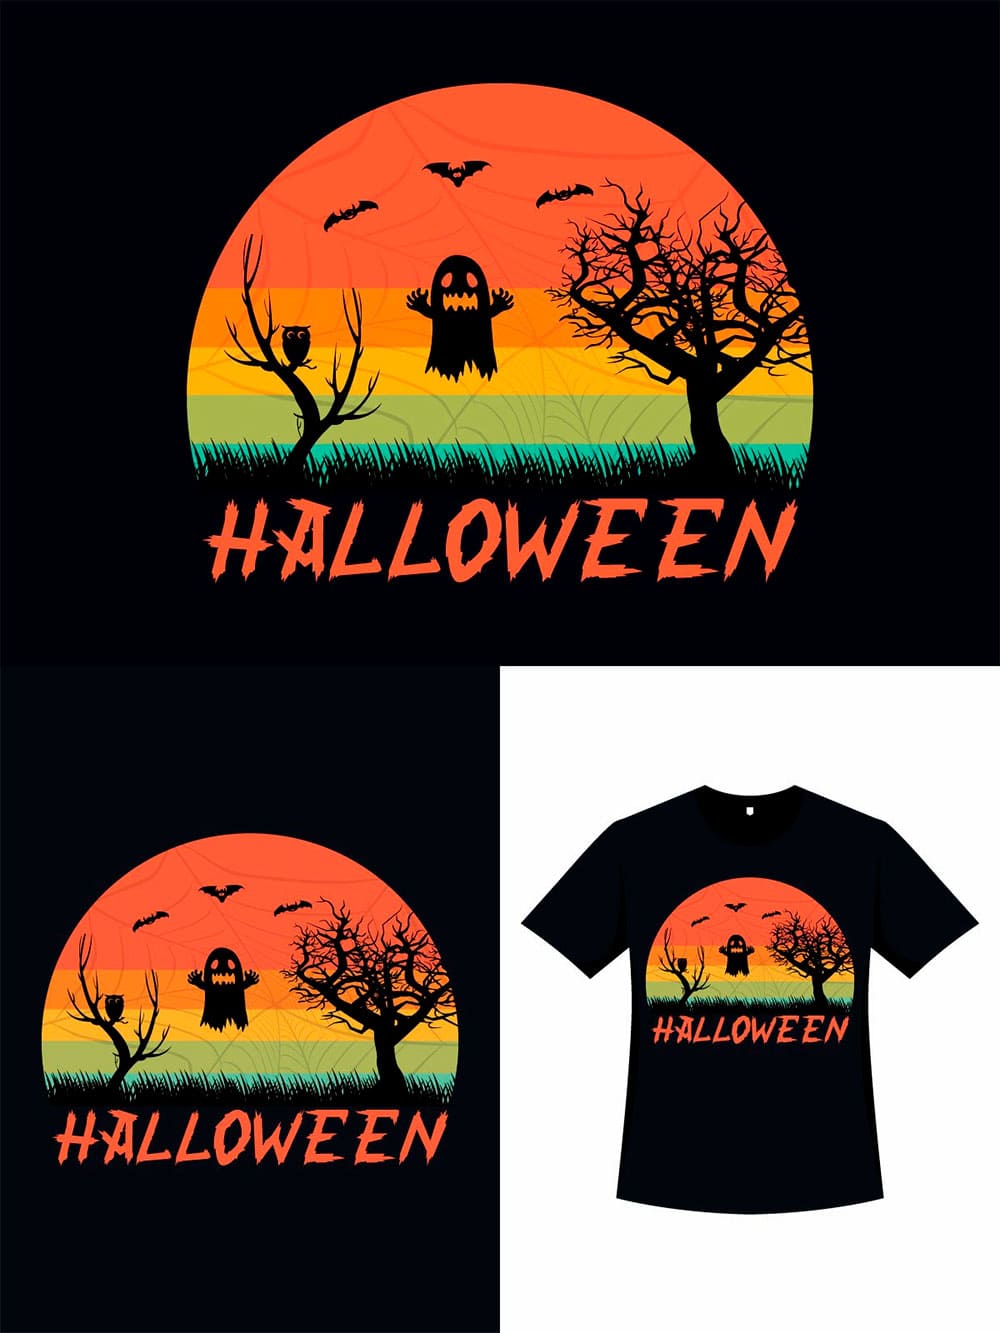 Retro color halloween t-shirt design, main picture 1000x1333.